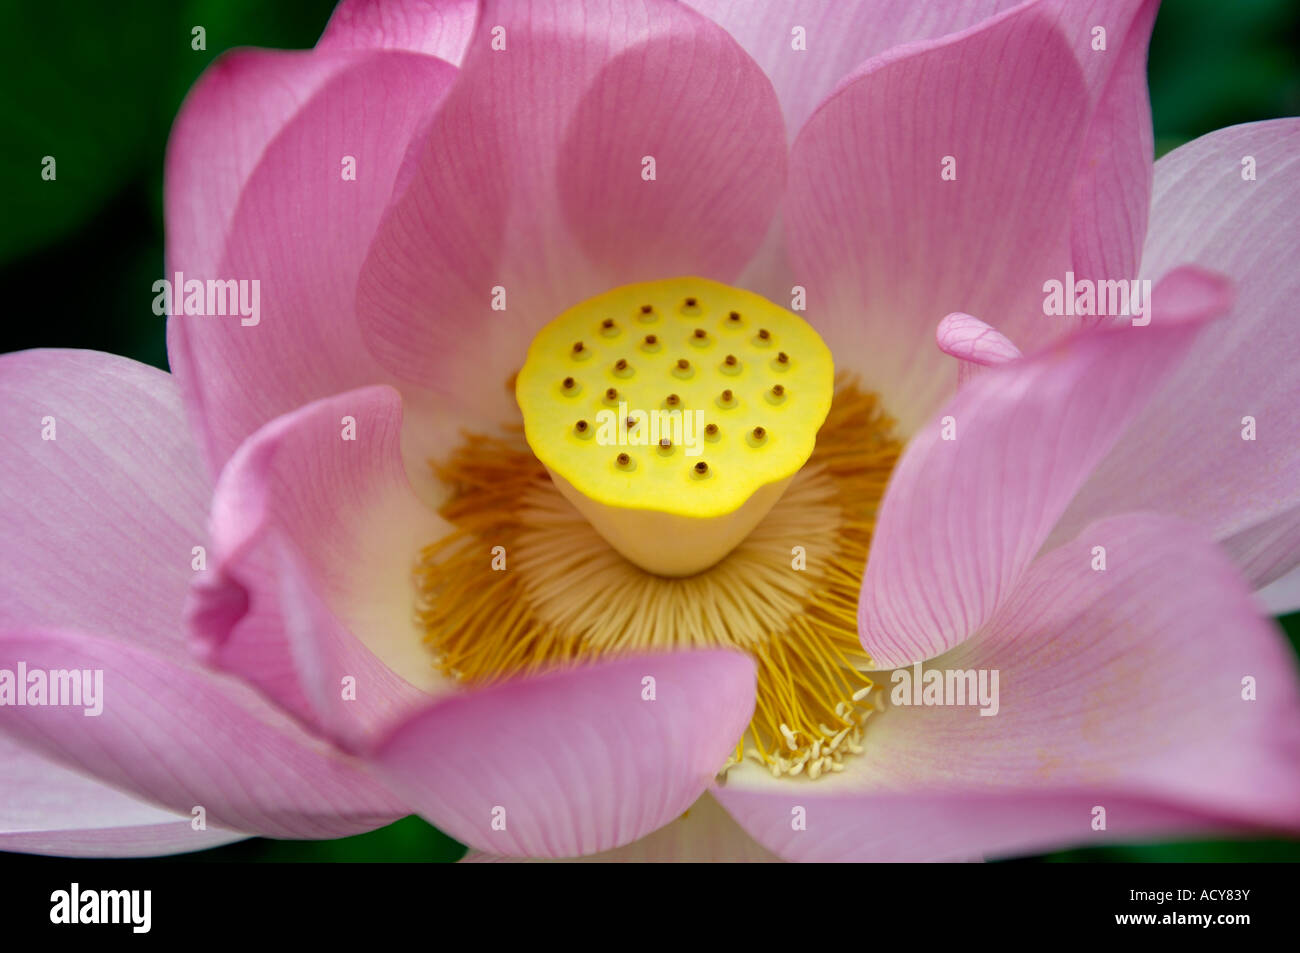 Lotus flower China pistil stamen Stock Photo